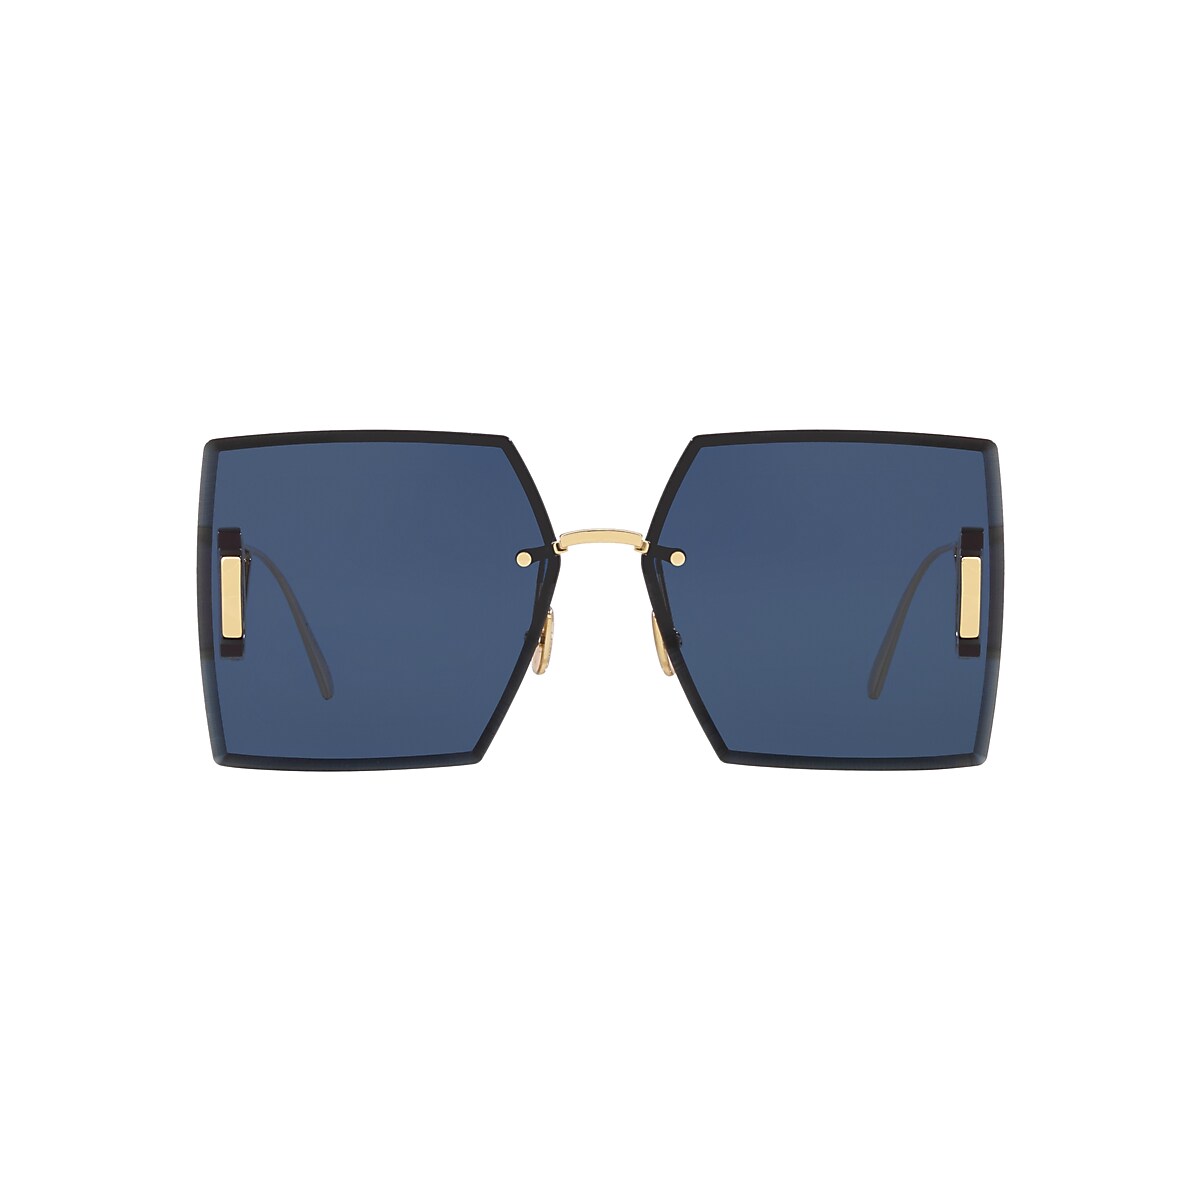 DIOR 30Montaigne S7U Gold Shiny - Women Luxury Sunglasses, Blue Lens